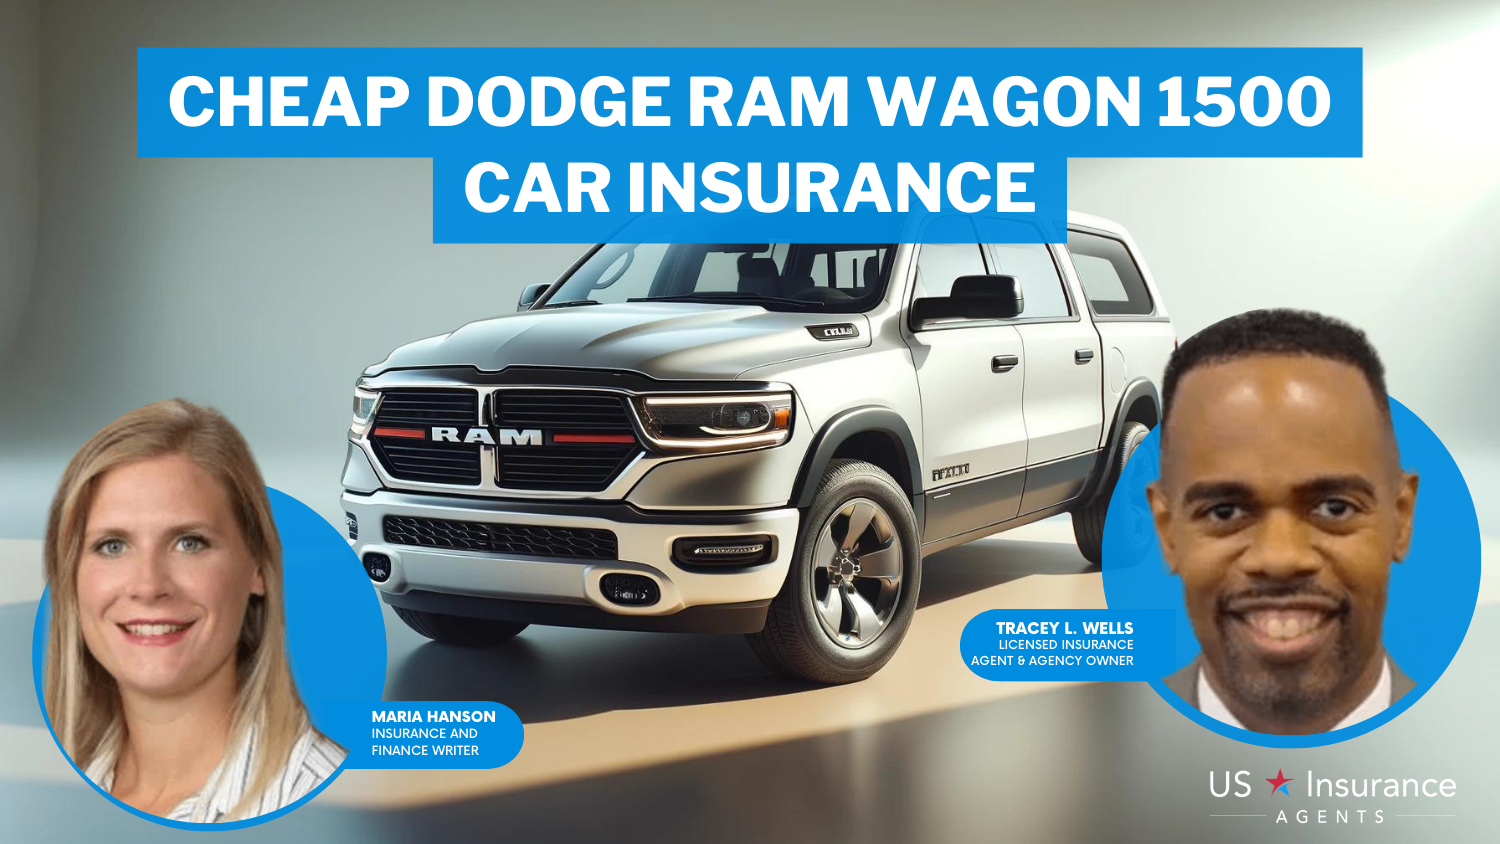 Cheap Dodge Ram Wagon 1500 Car Insurance: AAA, Travelers, and Erie